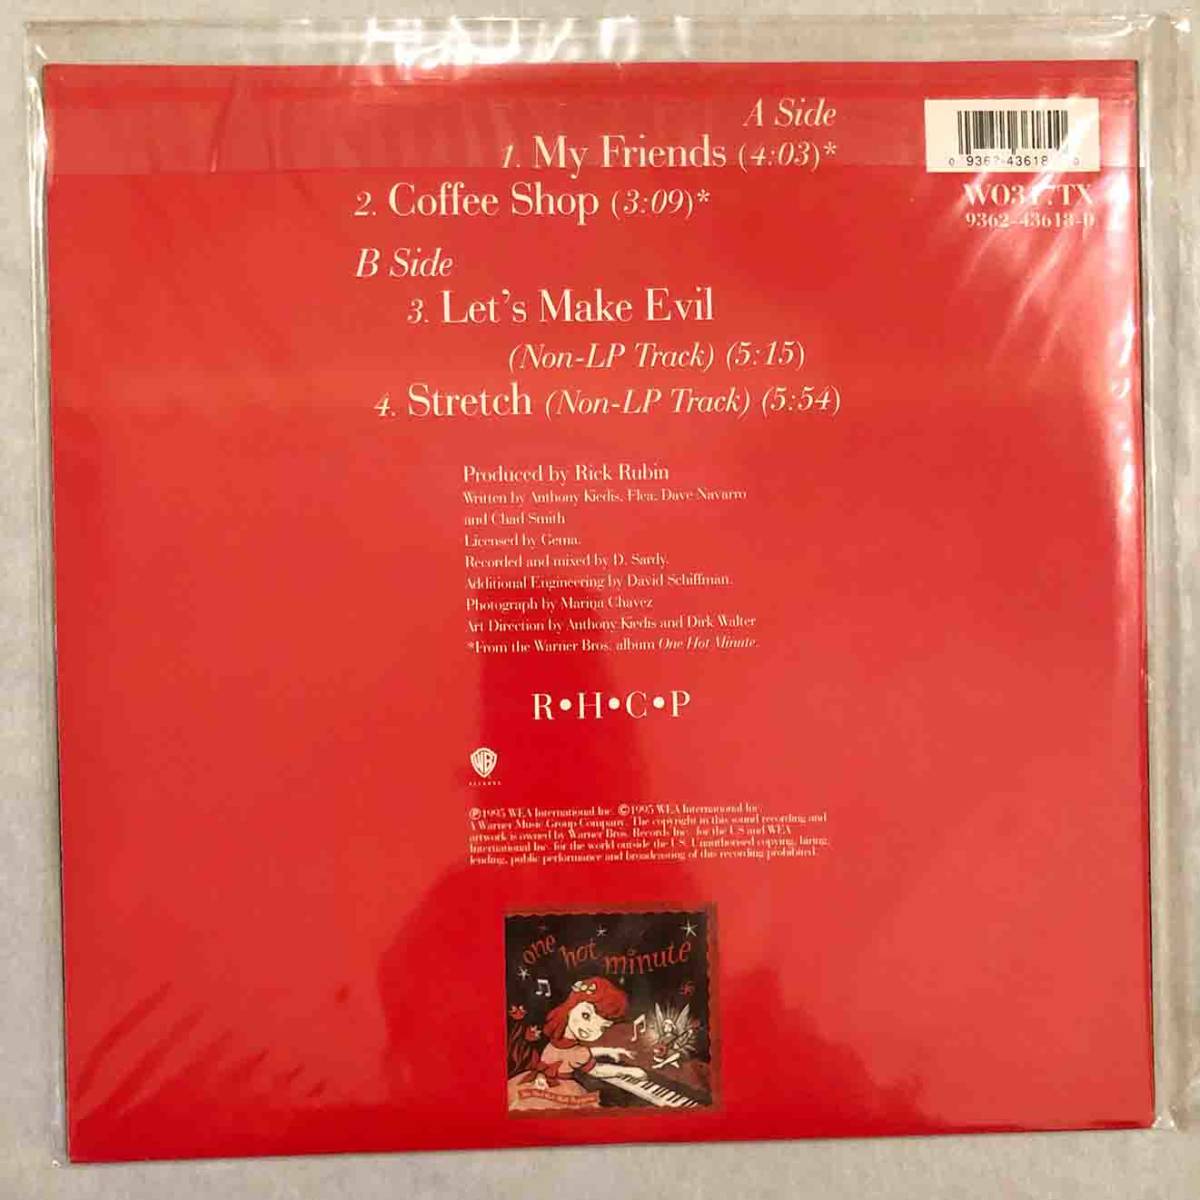 #1995 год UK запись оригинал новый товар защита RED HOT CHILI PEPPERS - My Friends 12~EP Limited Edition Poster W0317TX Warner Bros